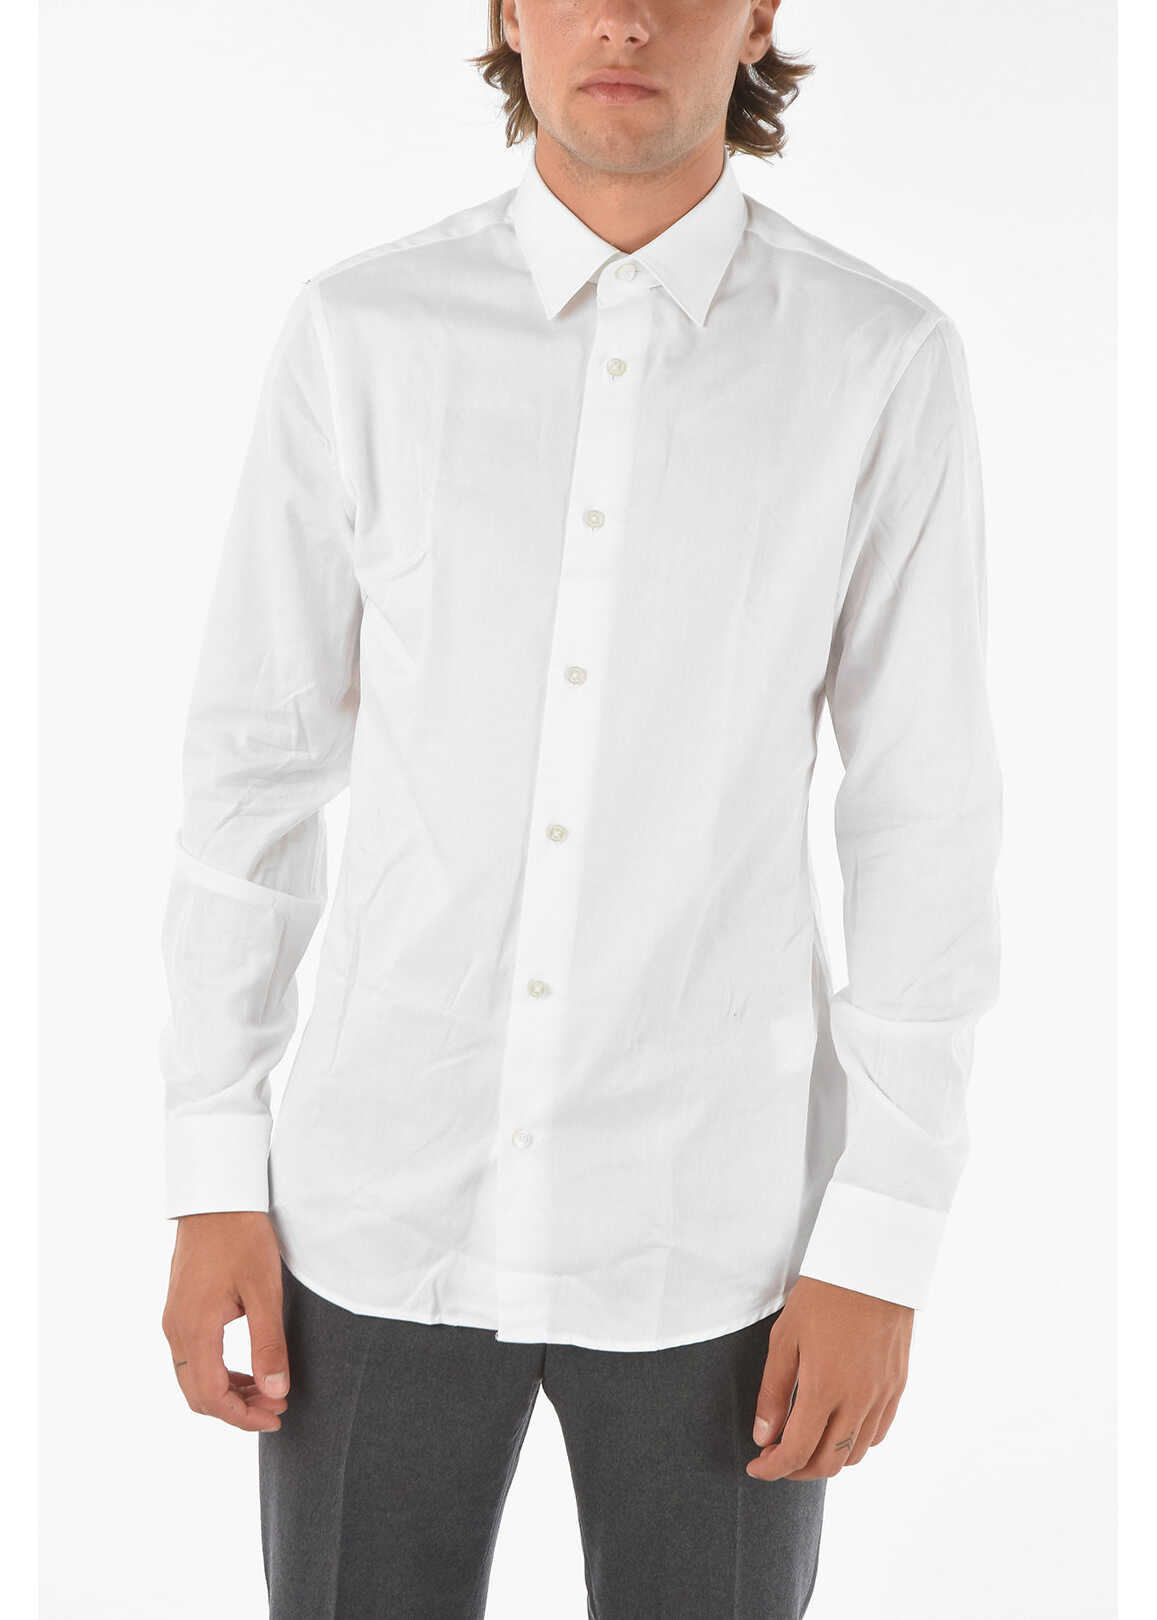 Ermenegildo Zegna Zzegna Cotton Slim Fit Shirt With Classic Collar White image3